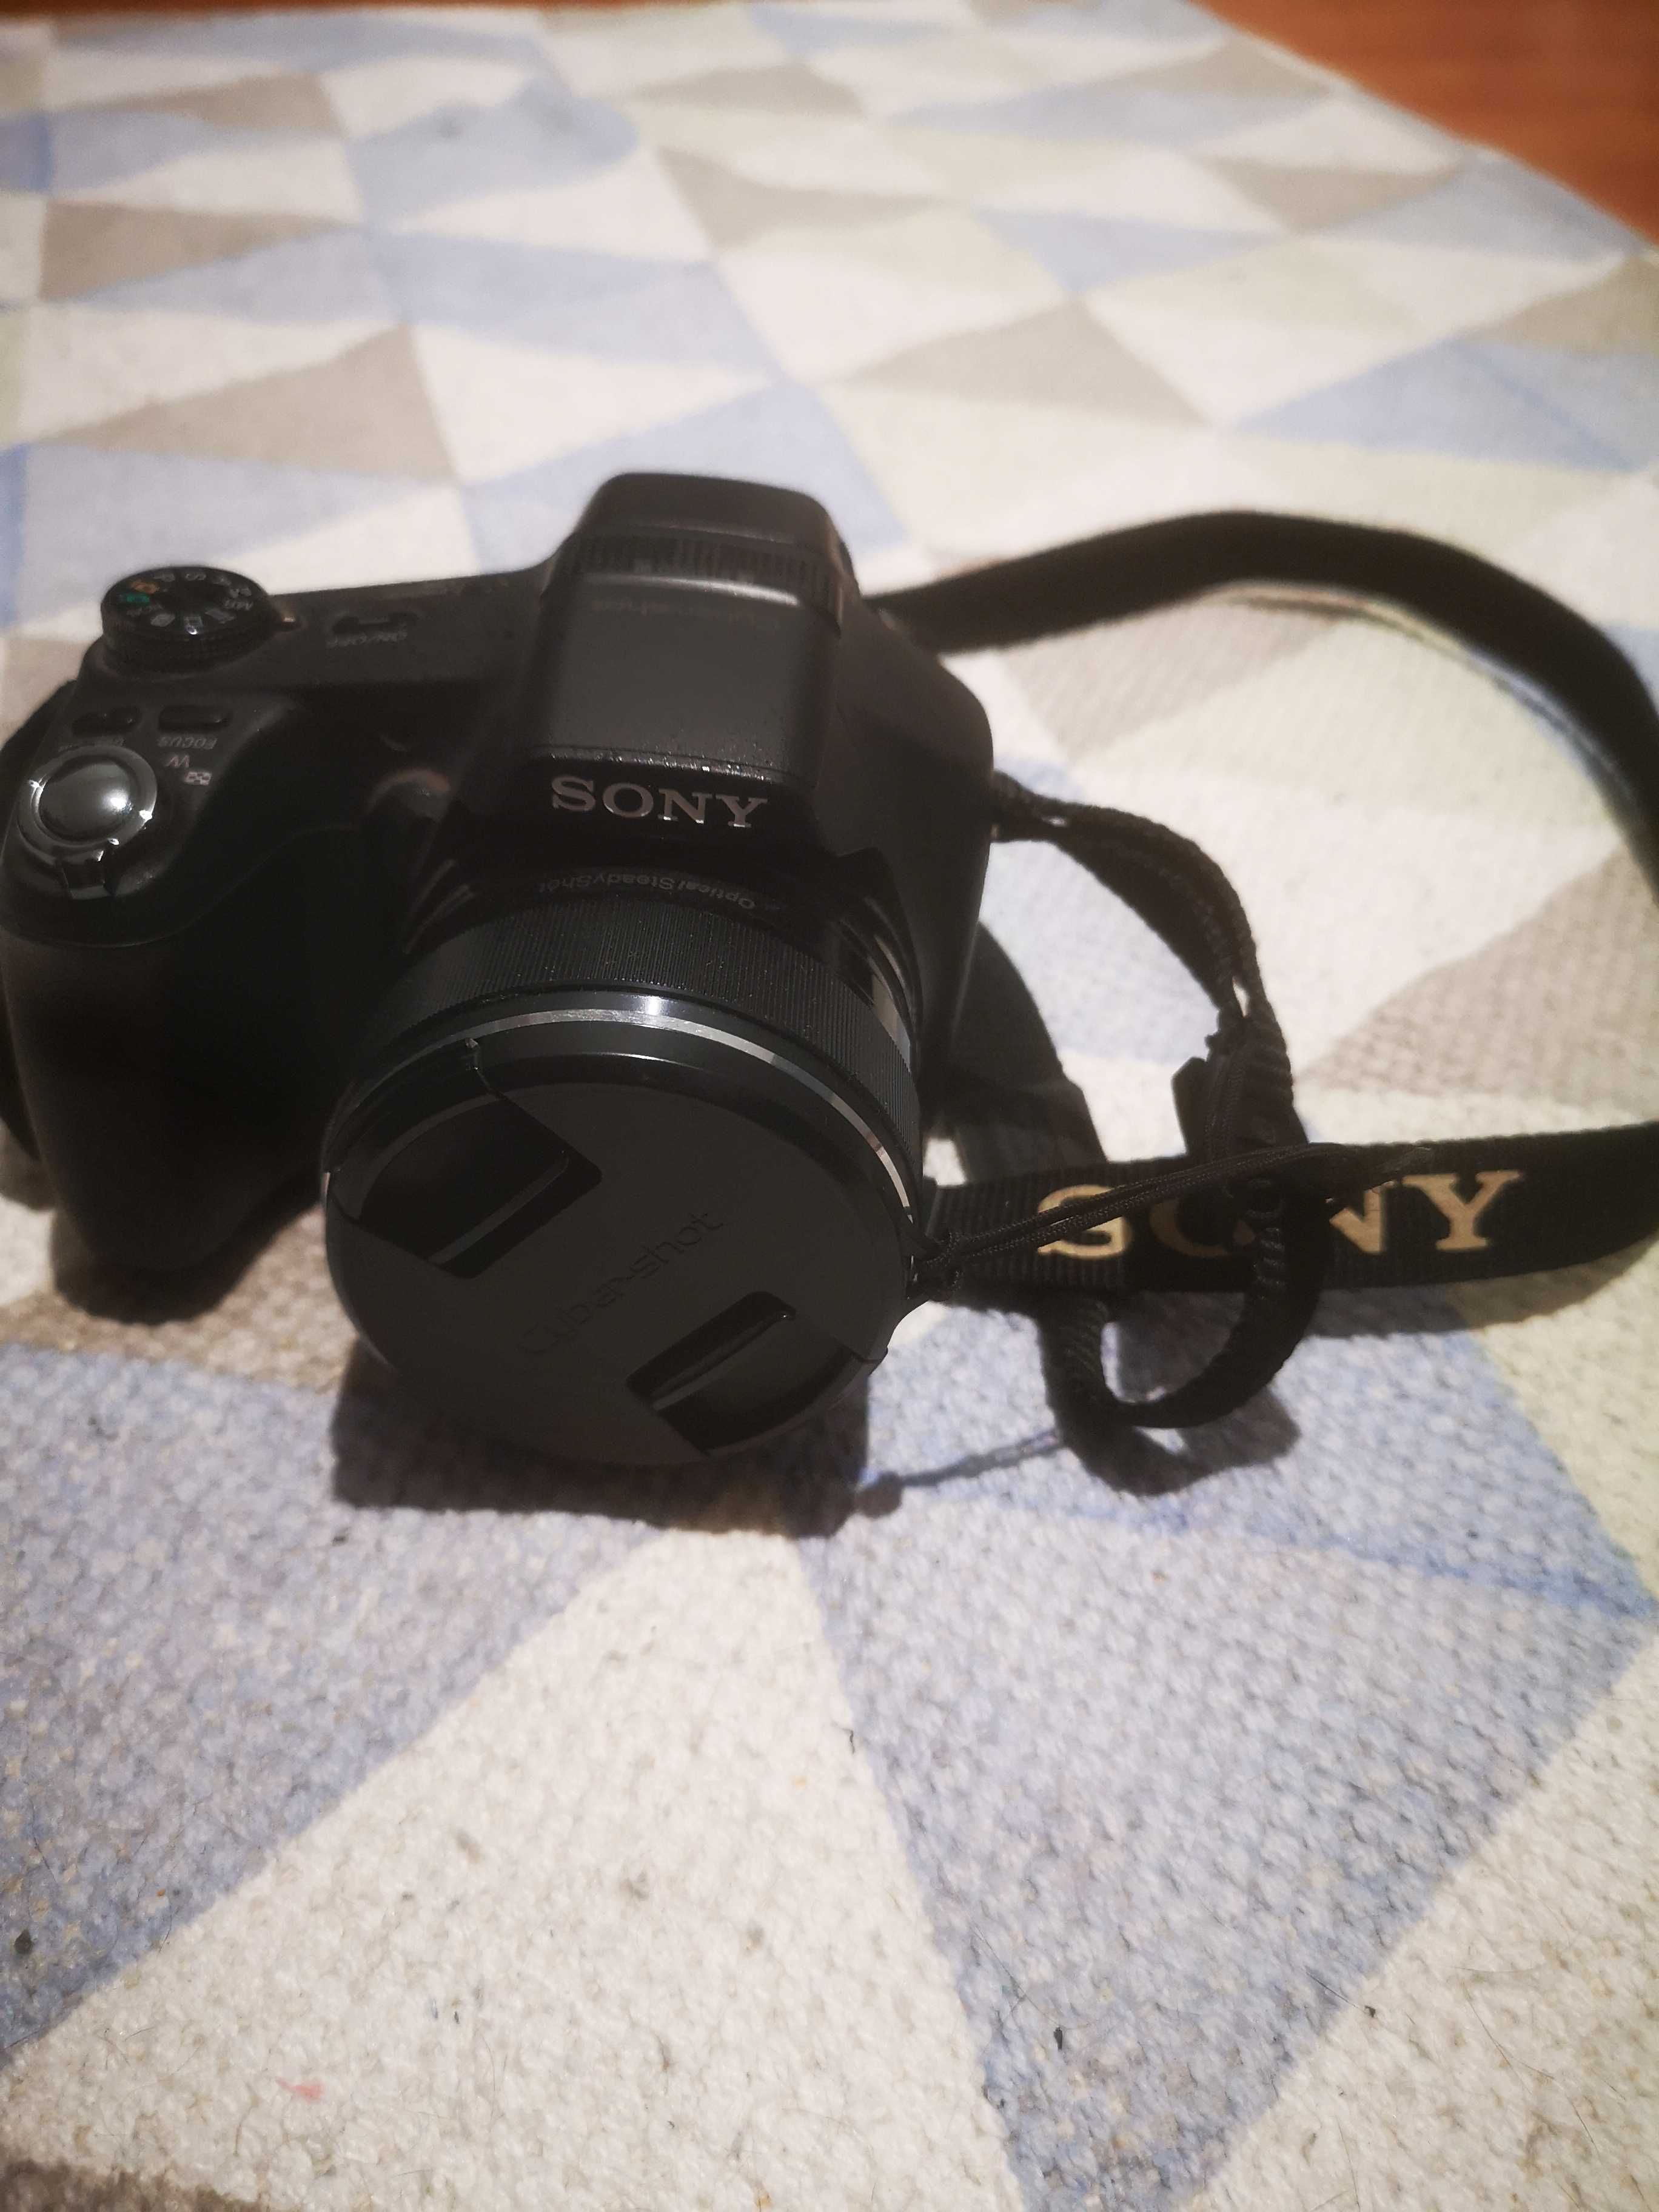 Camera Sony Cyber-shot DSC-HX100V Bridge 16 - Preto